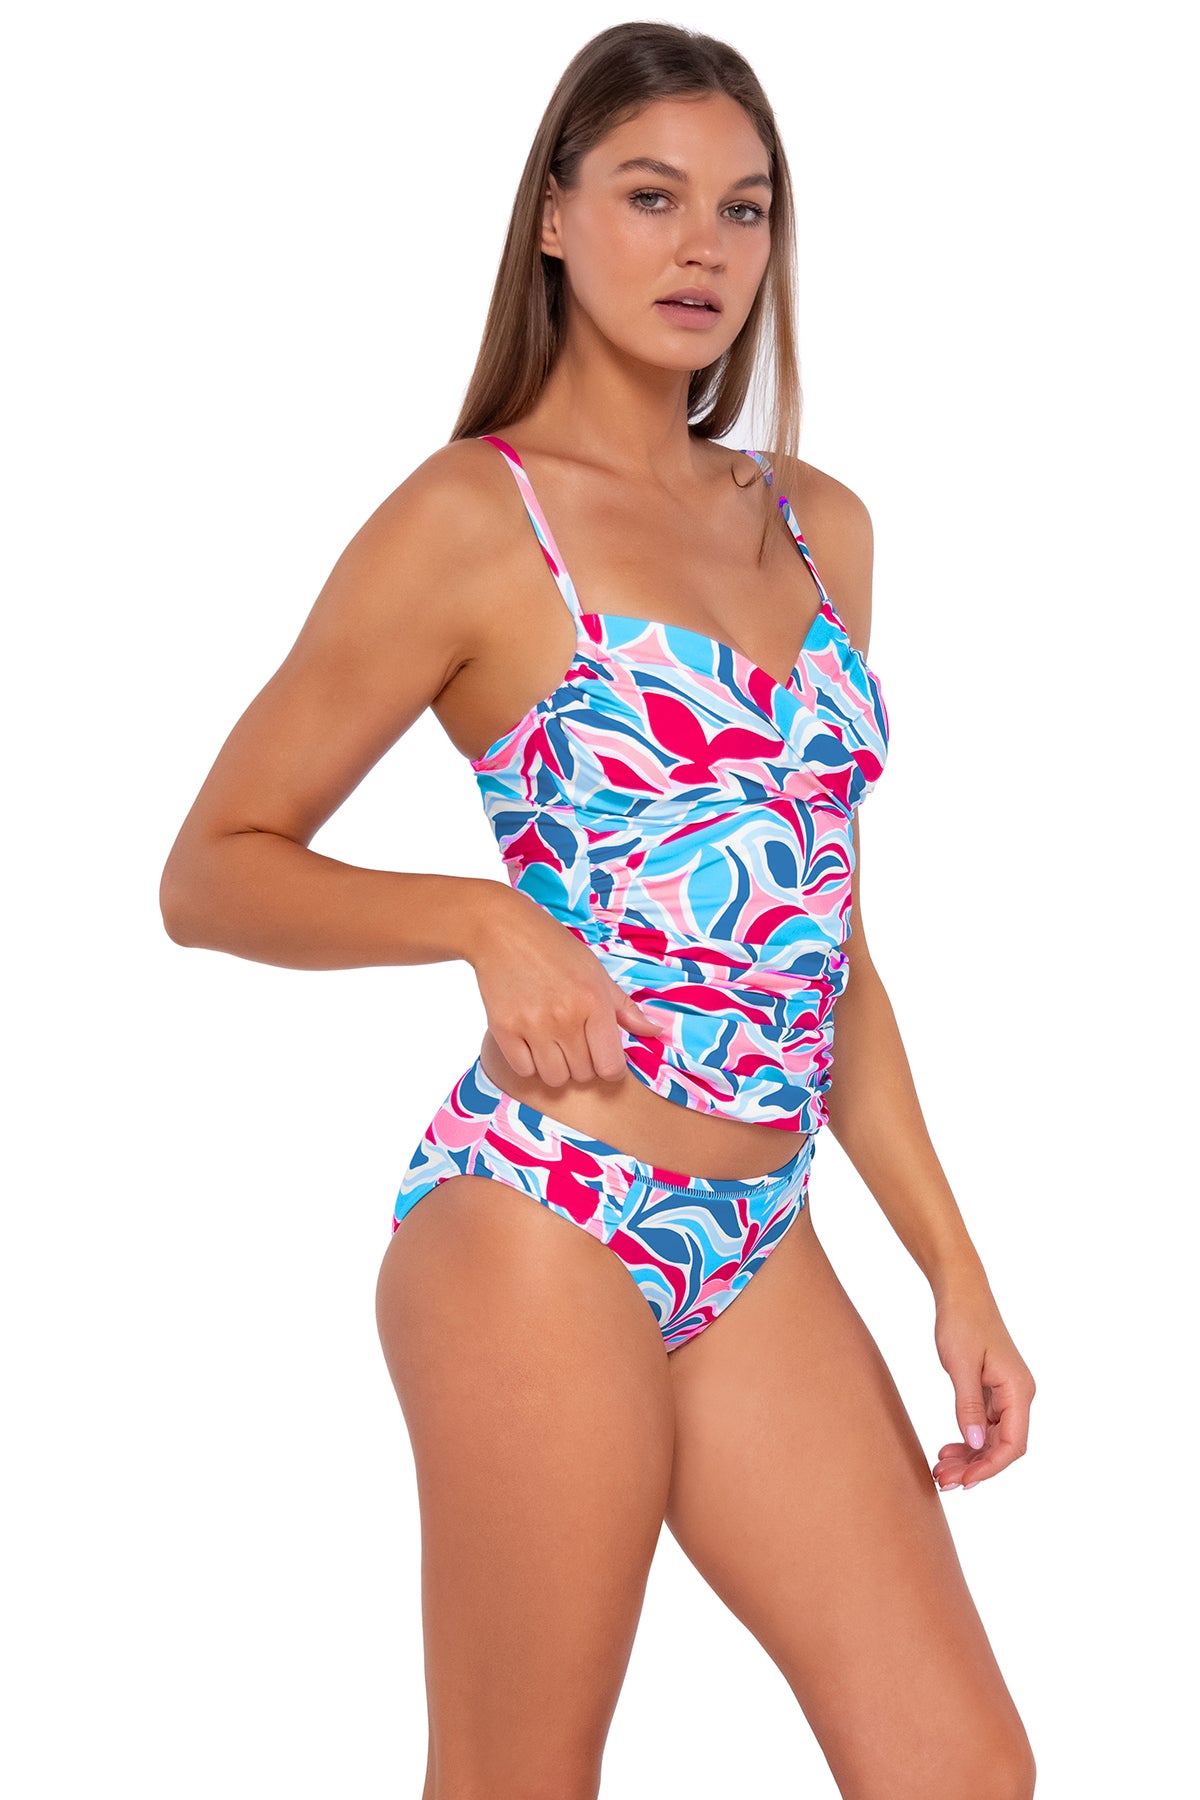 Side pose #1 of Daria wearing Sunsets Making Waves Simone Tankini Top lifted to show matching Audra Hipster bikini bottom